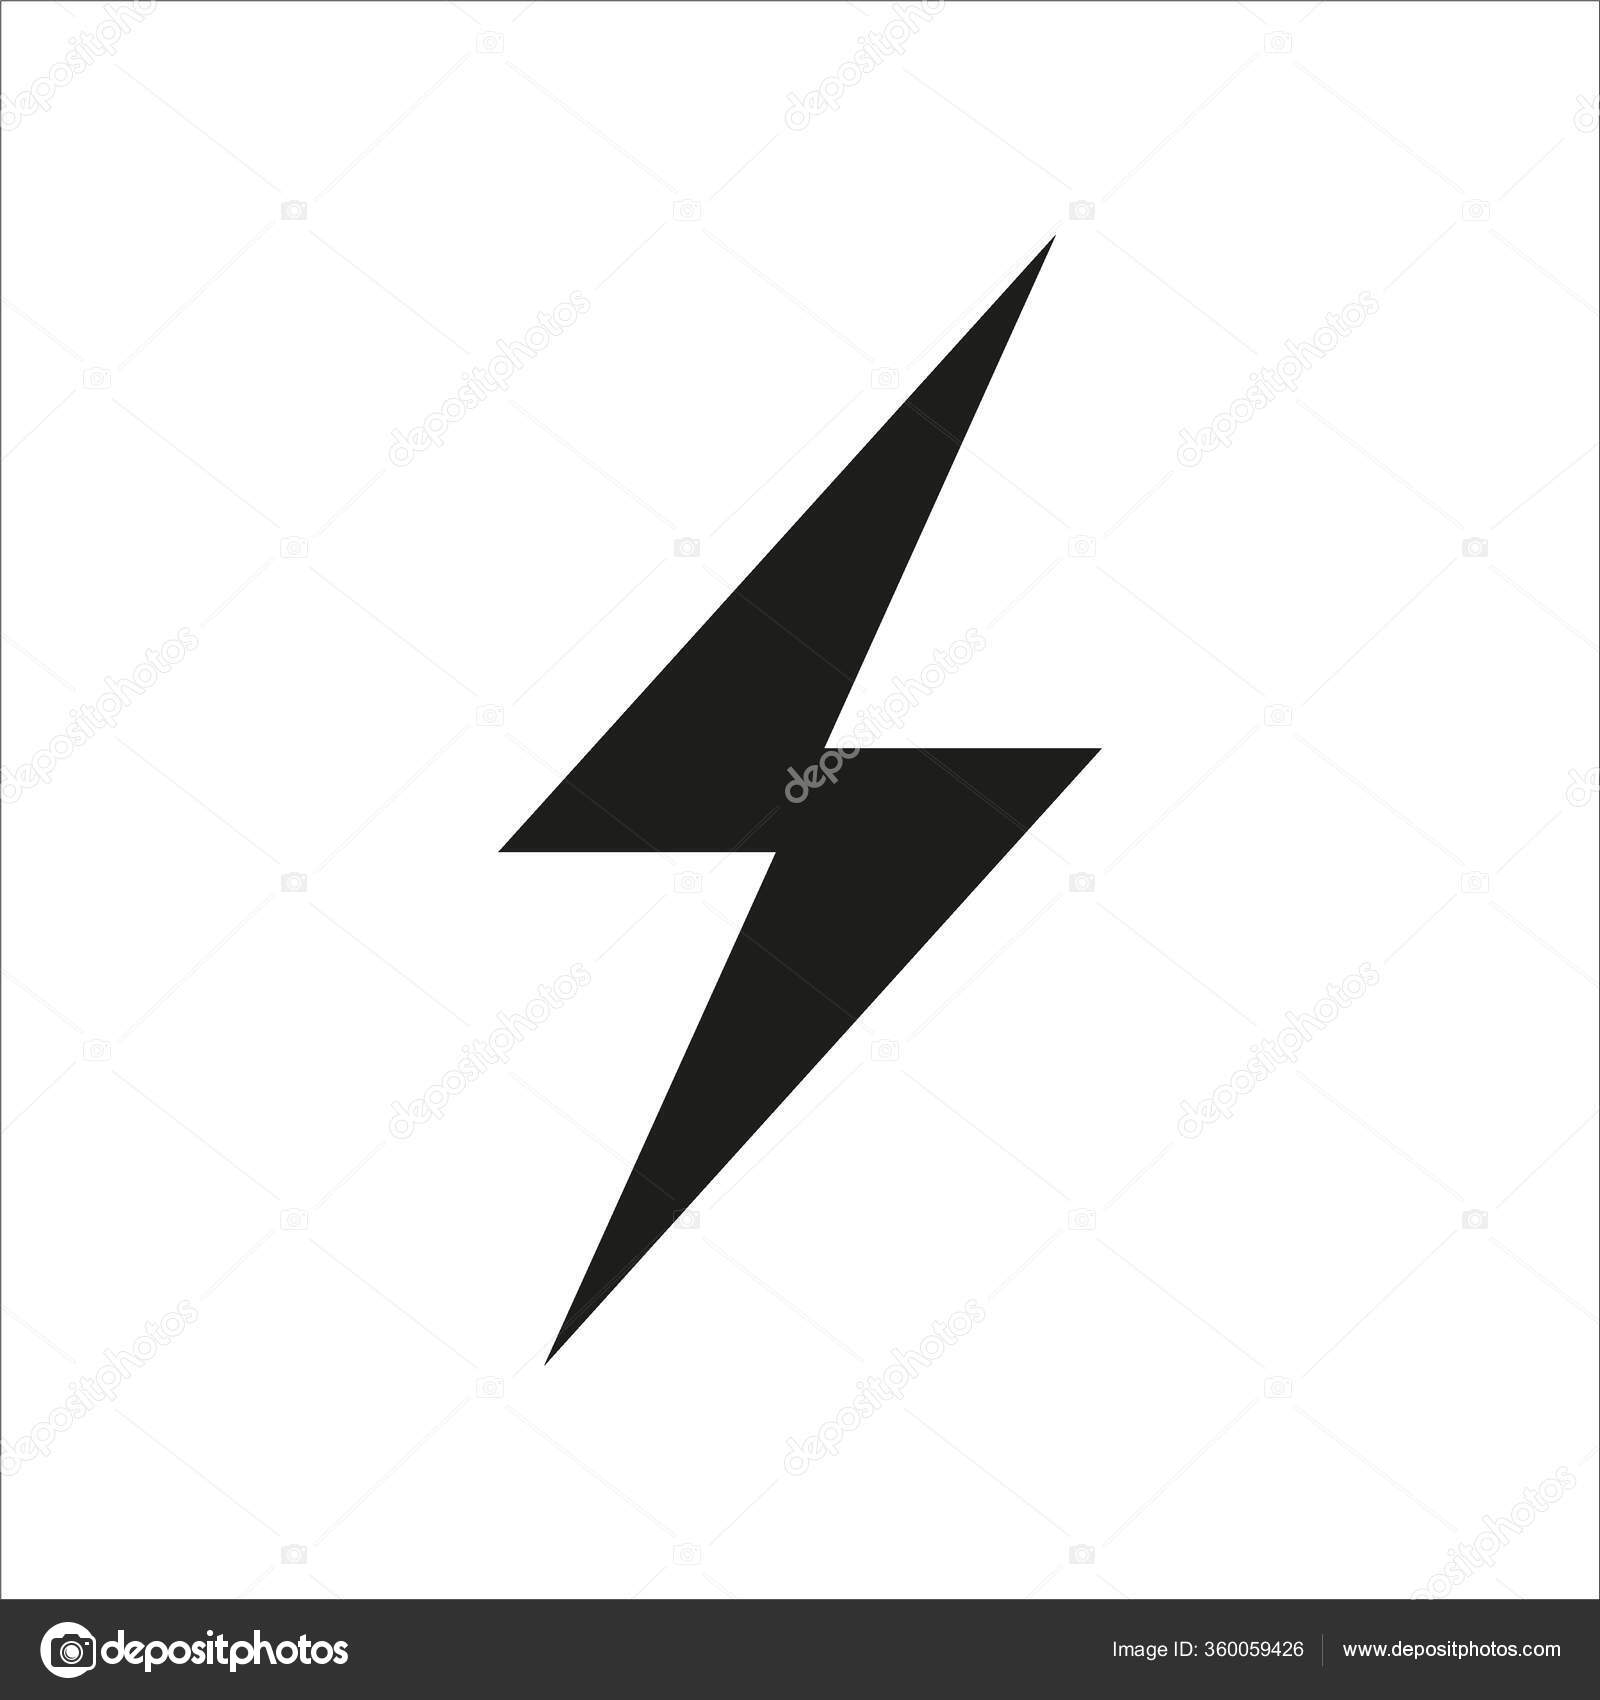 https://st3.depositphotos.com/2009363/36005/v/1600/depositphotos_360059426-stock-illustration-flash-icon-symbol-simple-design.jpg